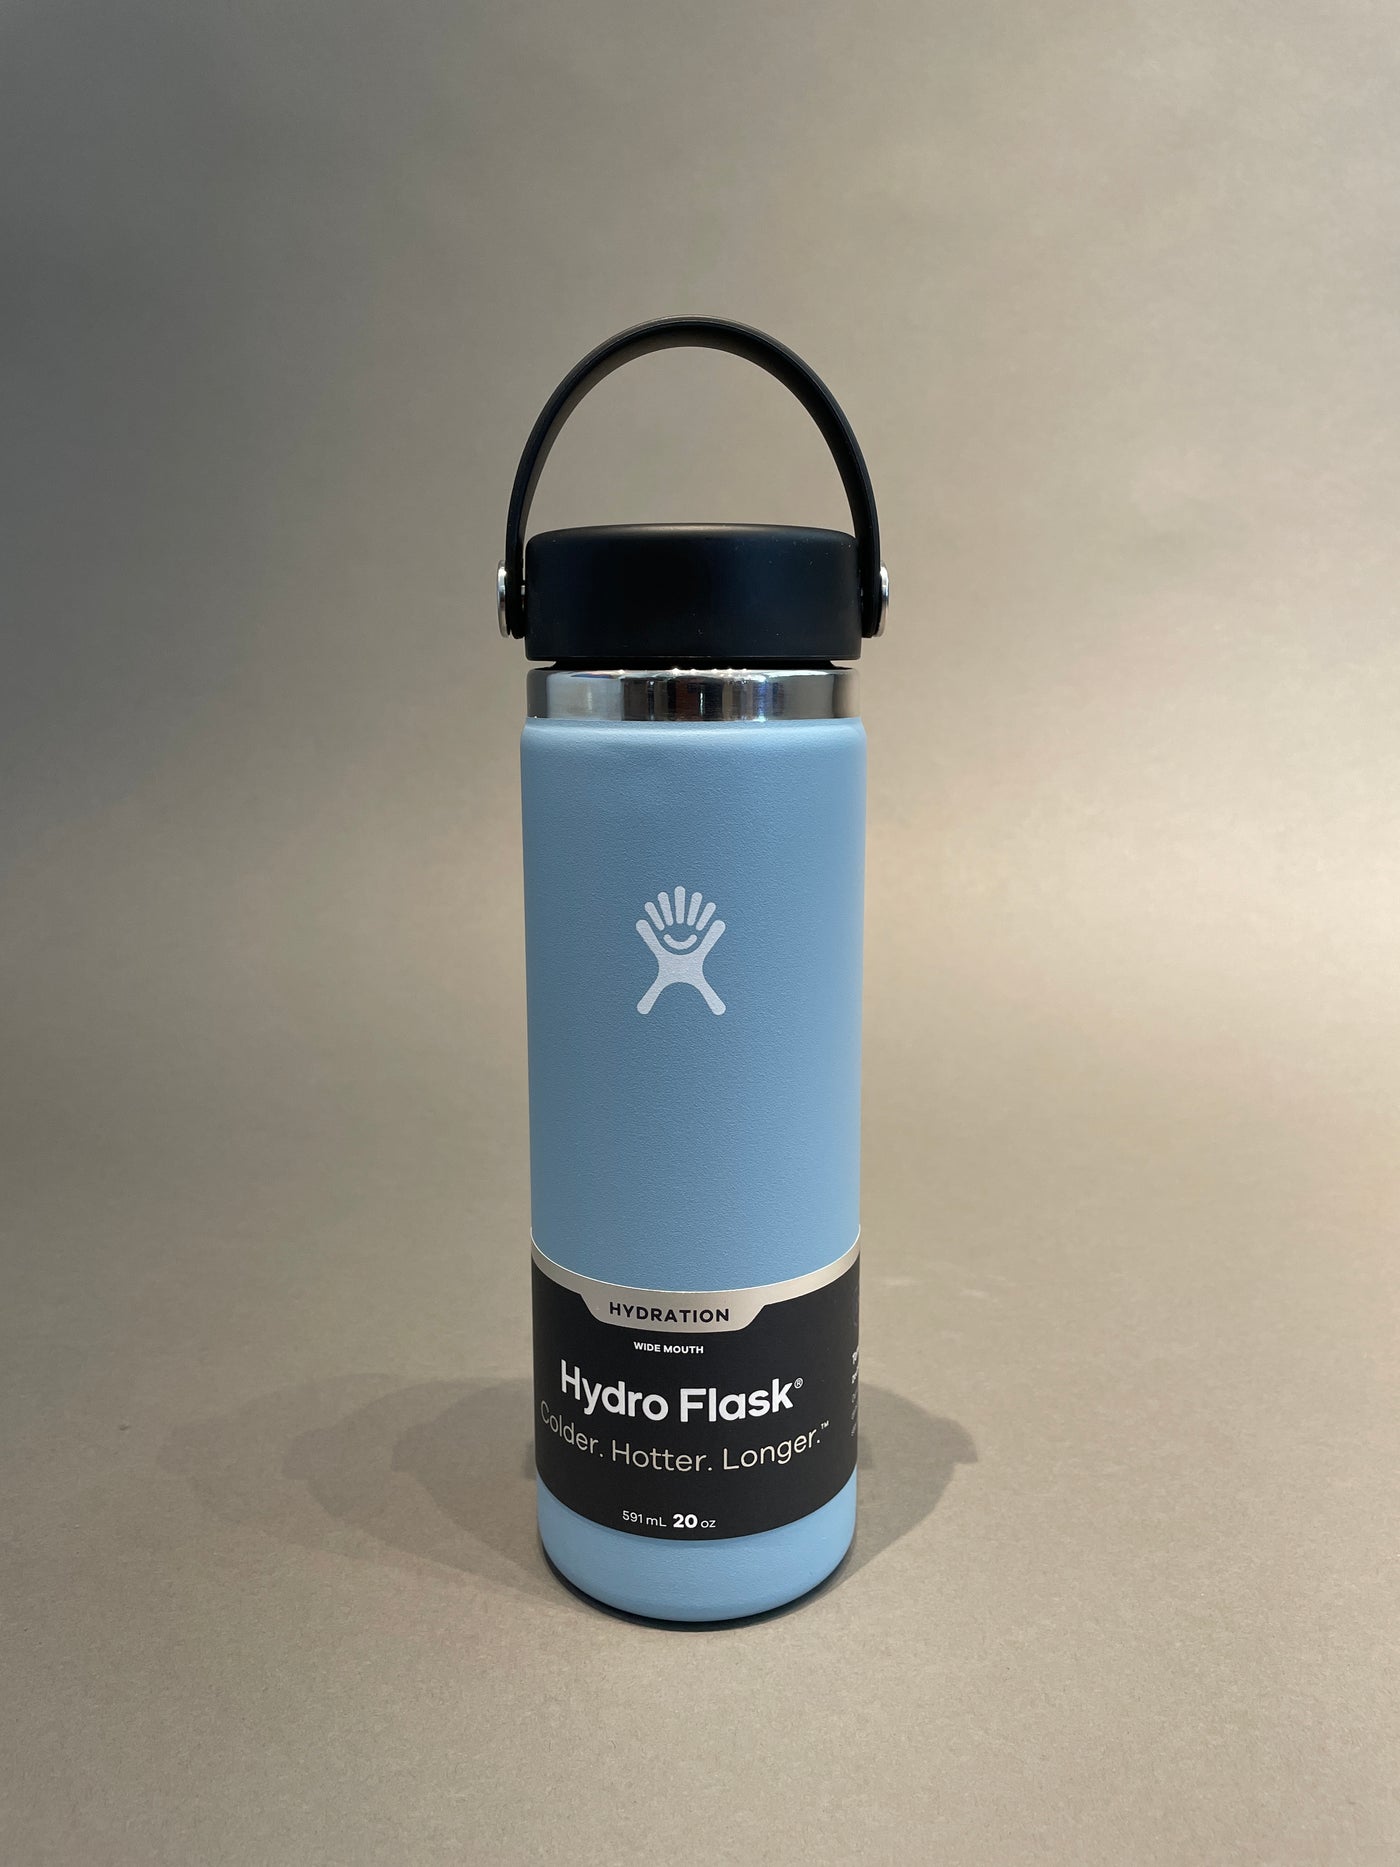 Hydro Flask 24 oz Coffee Mug Rain